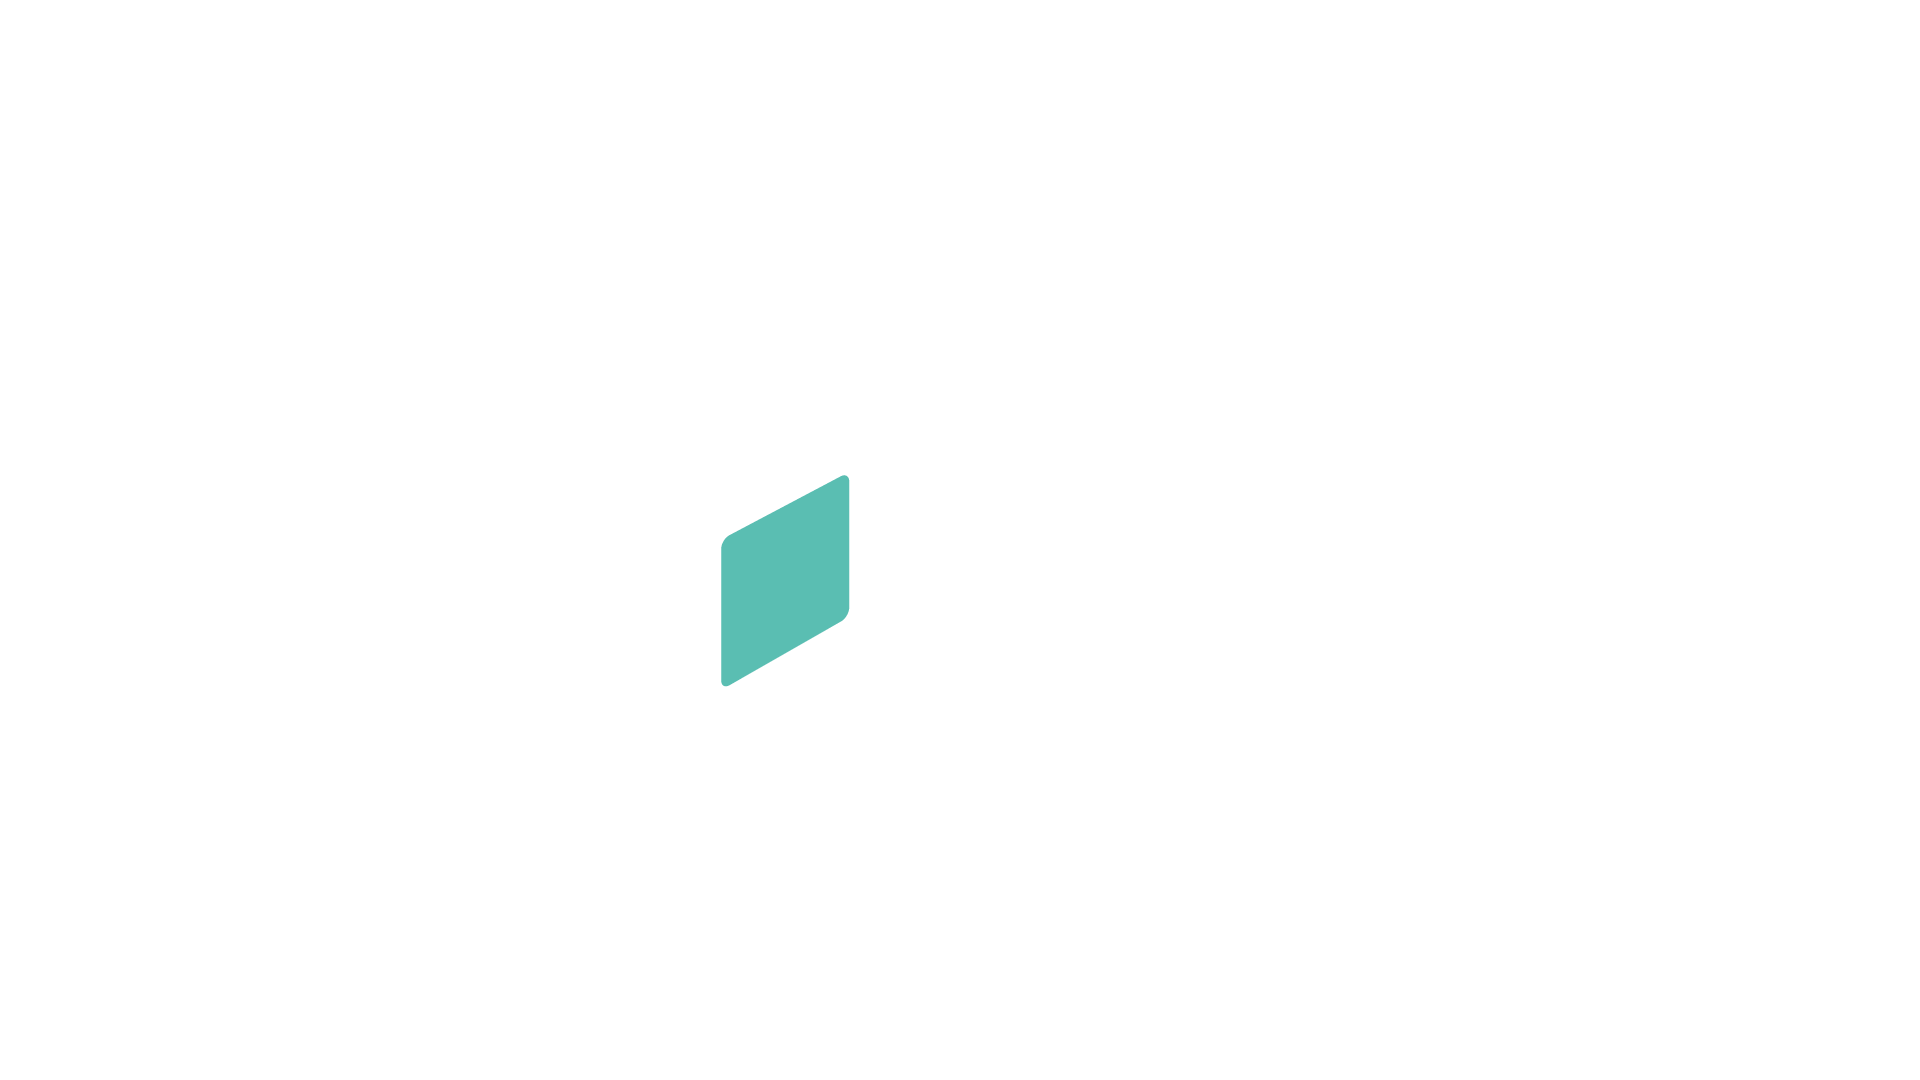 Iard cube logo segment